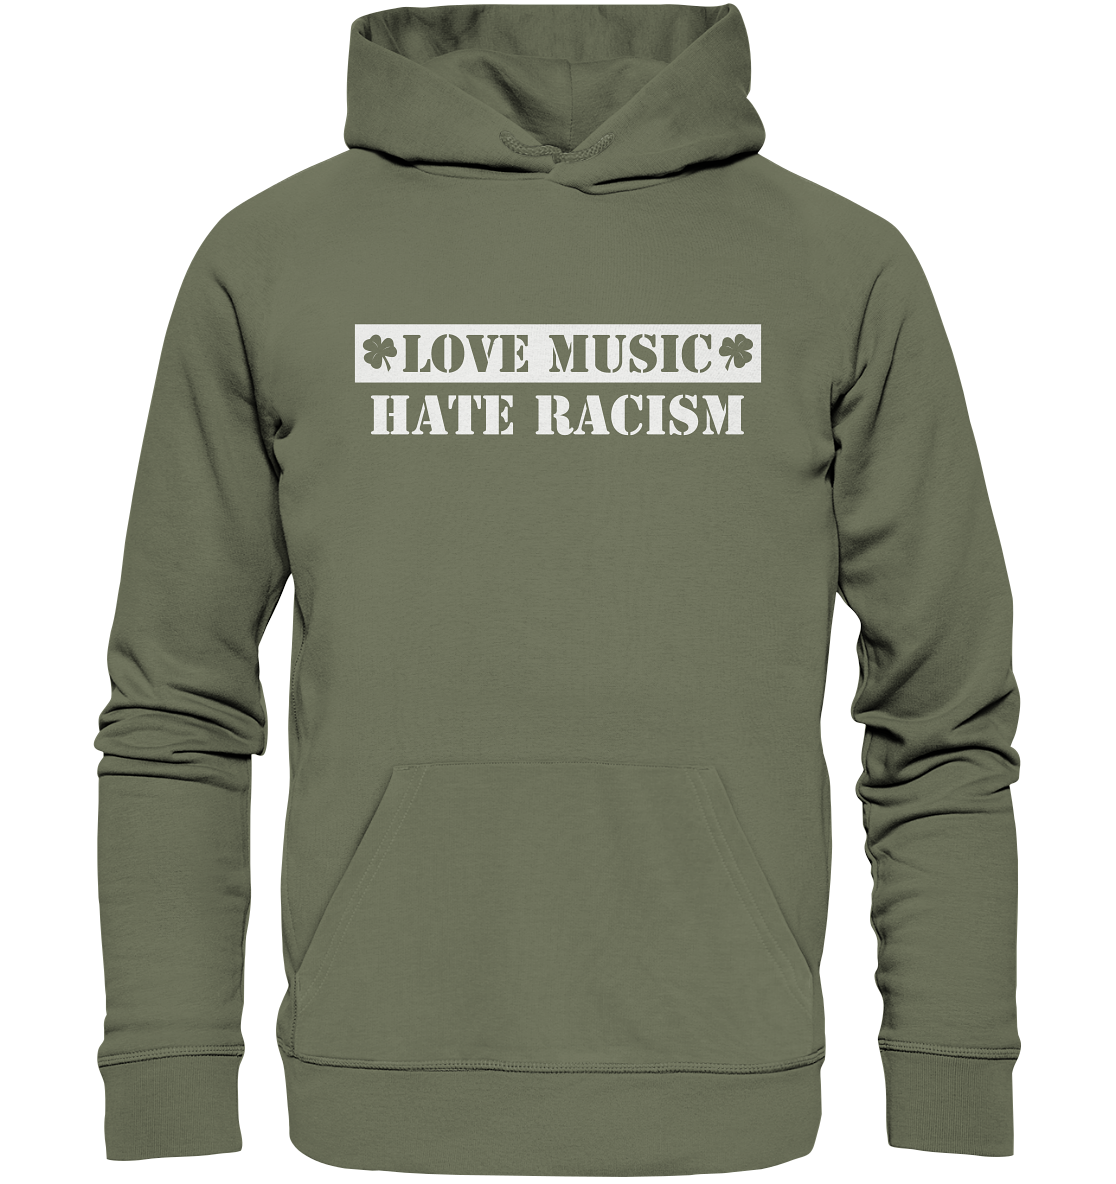 "Love Music - Hate Racism" - Premium Unisex Hoodie